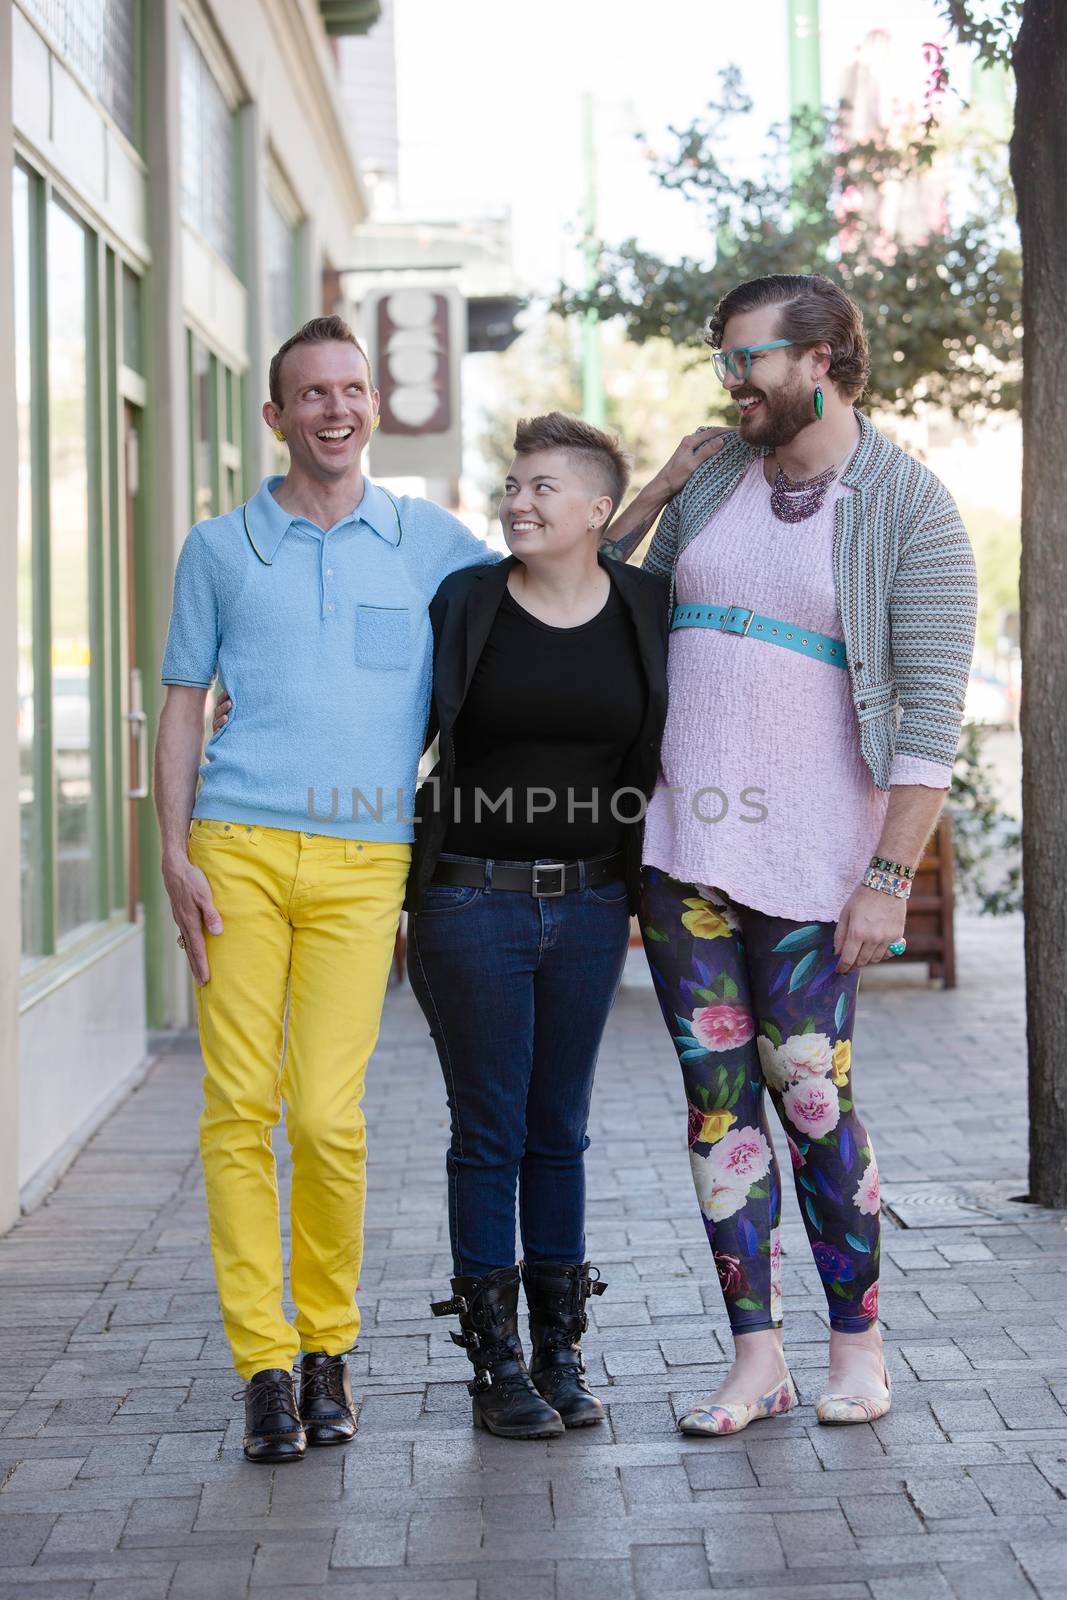 Three gender fluid friends on an urban sidewalk